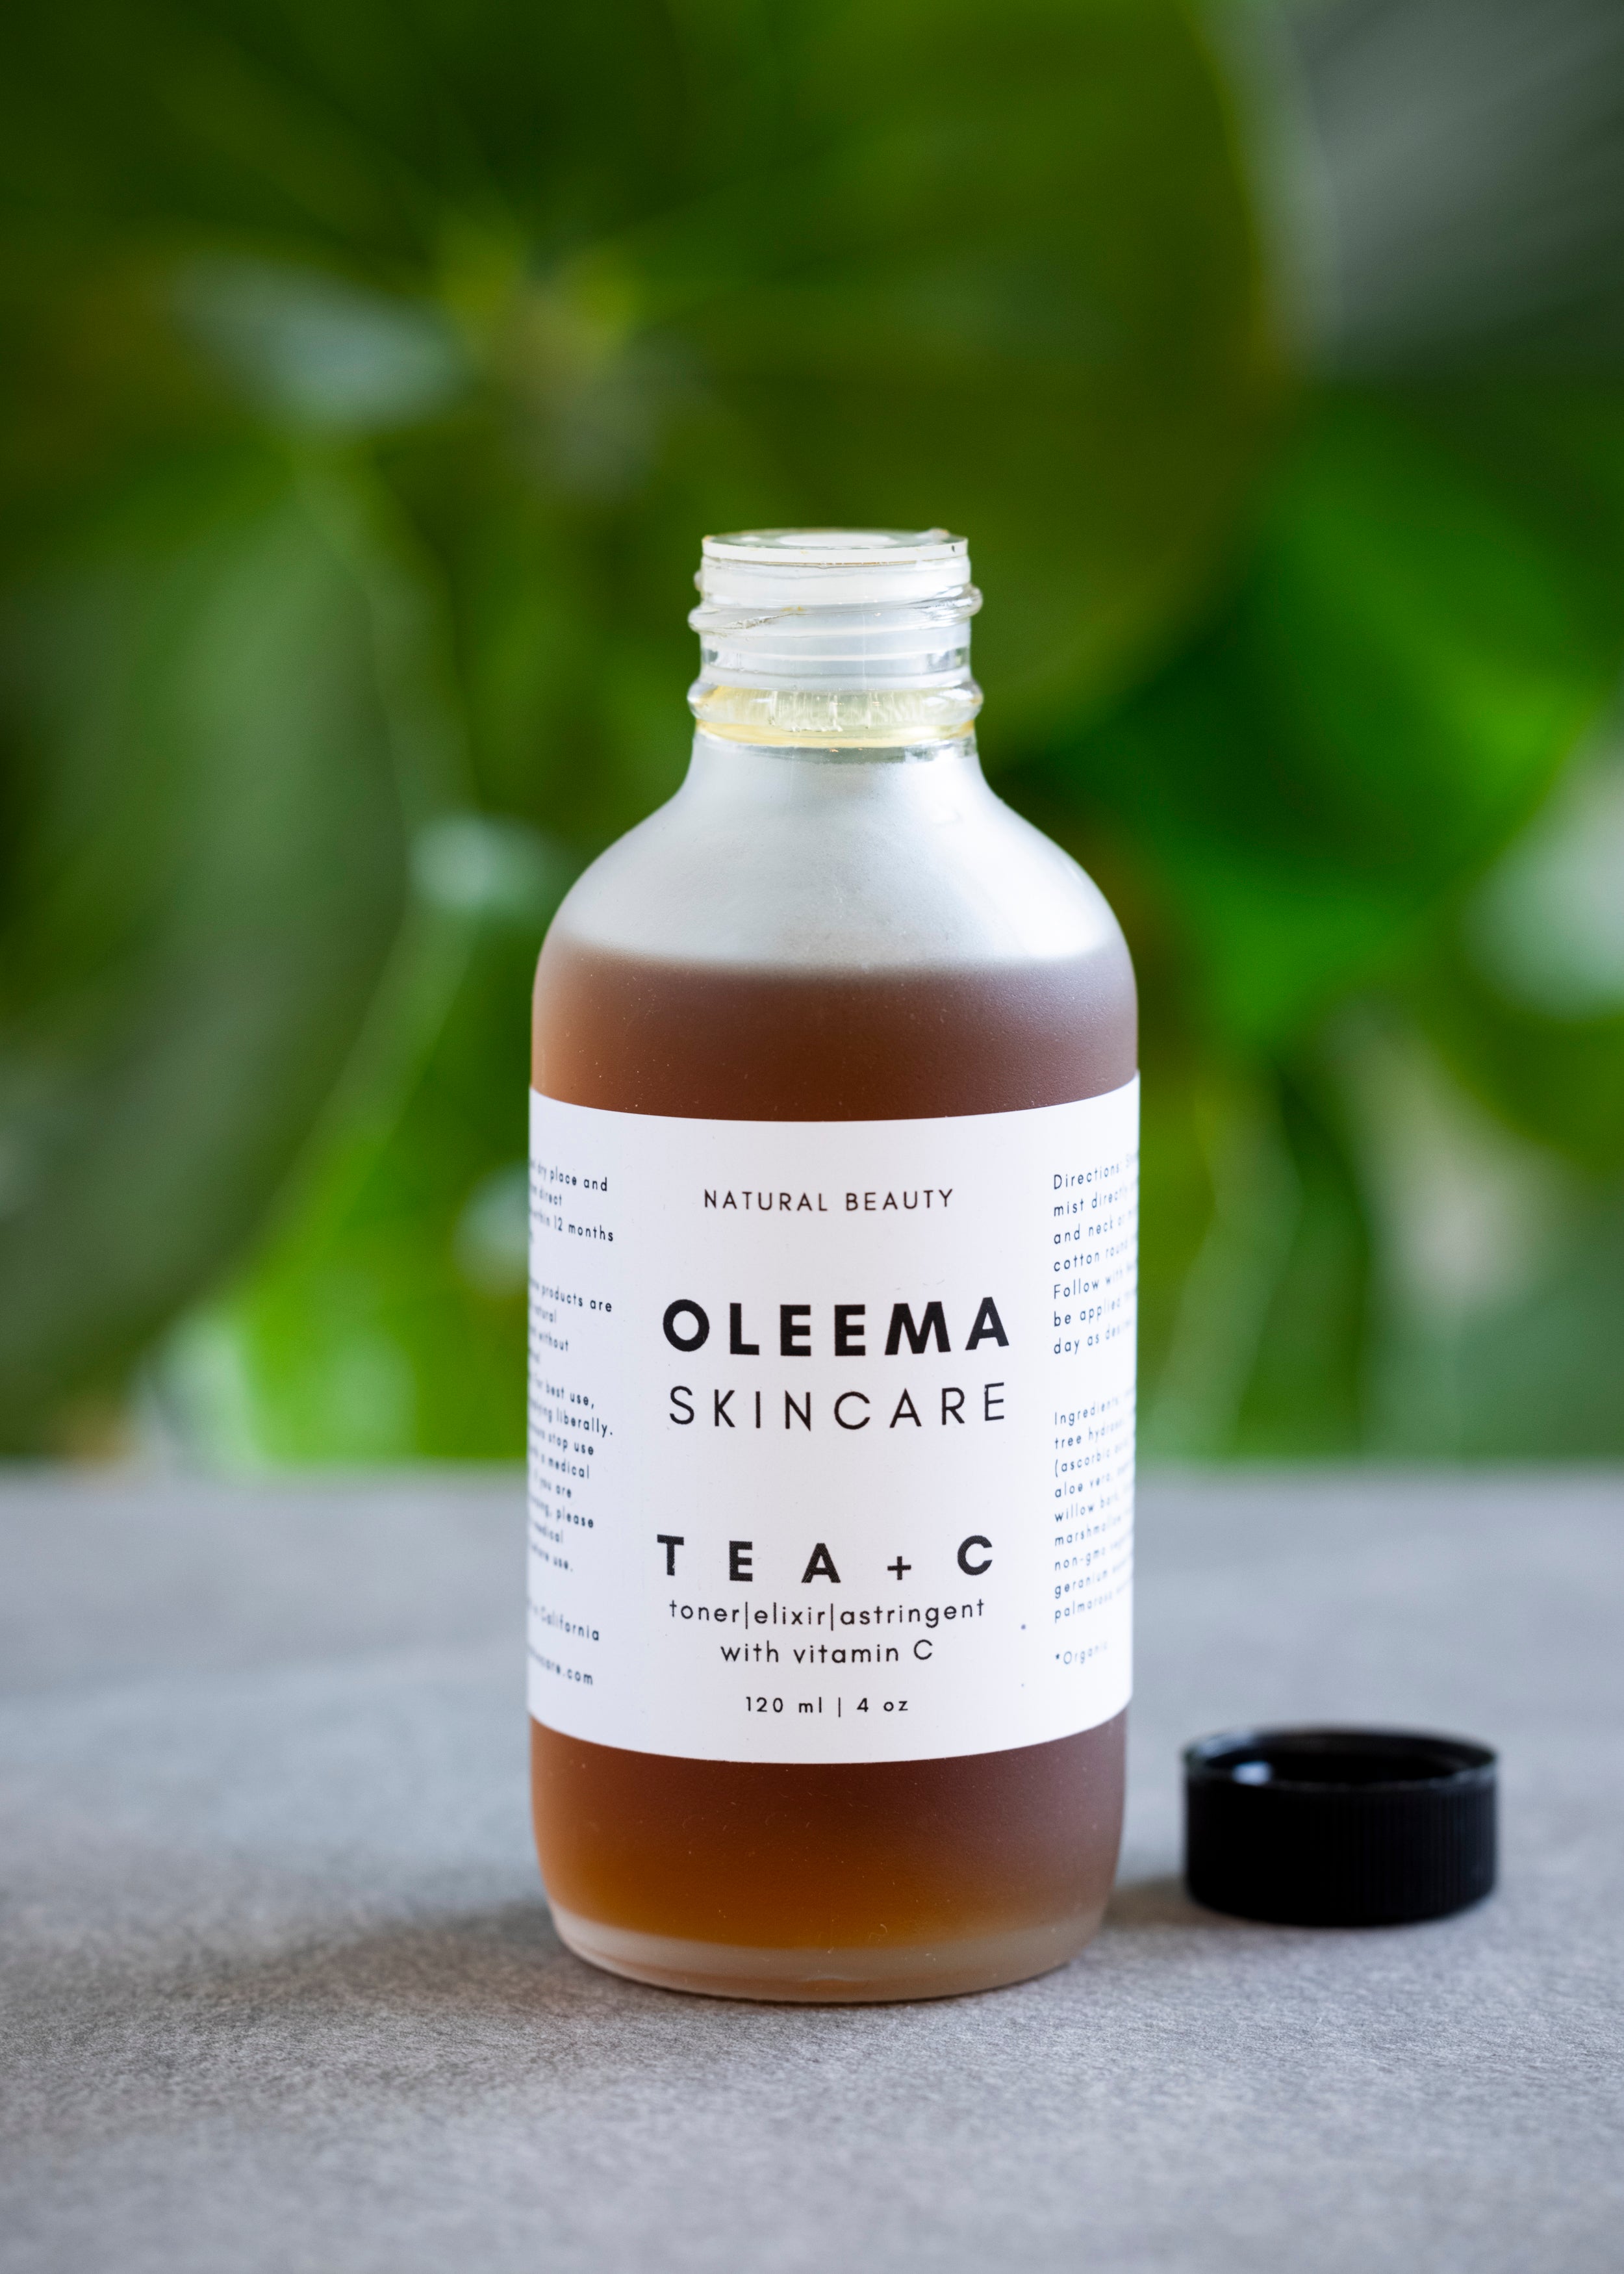 TEA + C  toner | elixir | astringent + Vitamin C